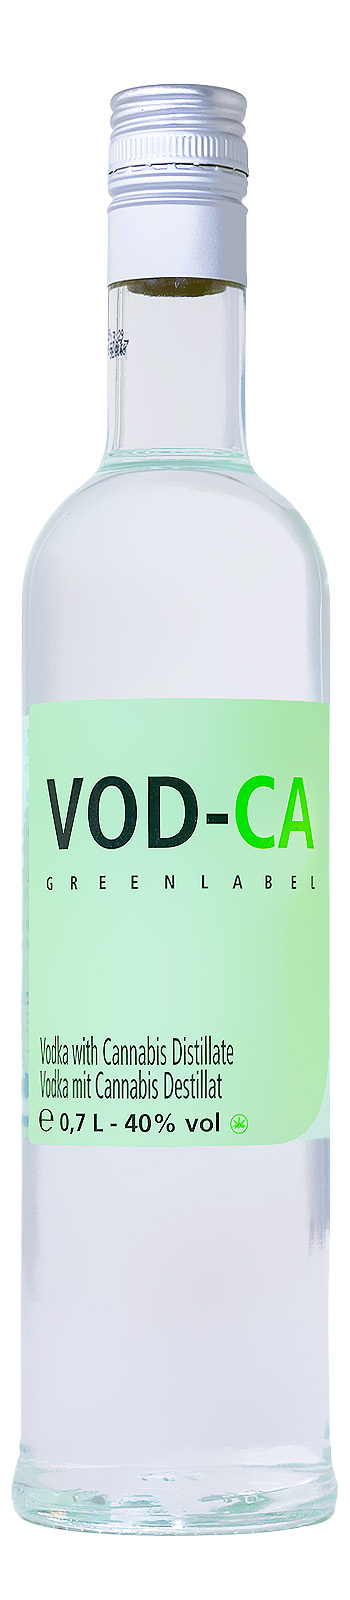 VOD-CA Vodka mit Cannabis Destillat - 0,7L 40% vol